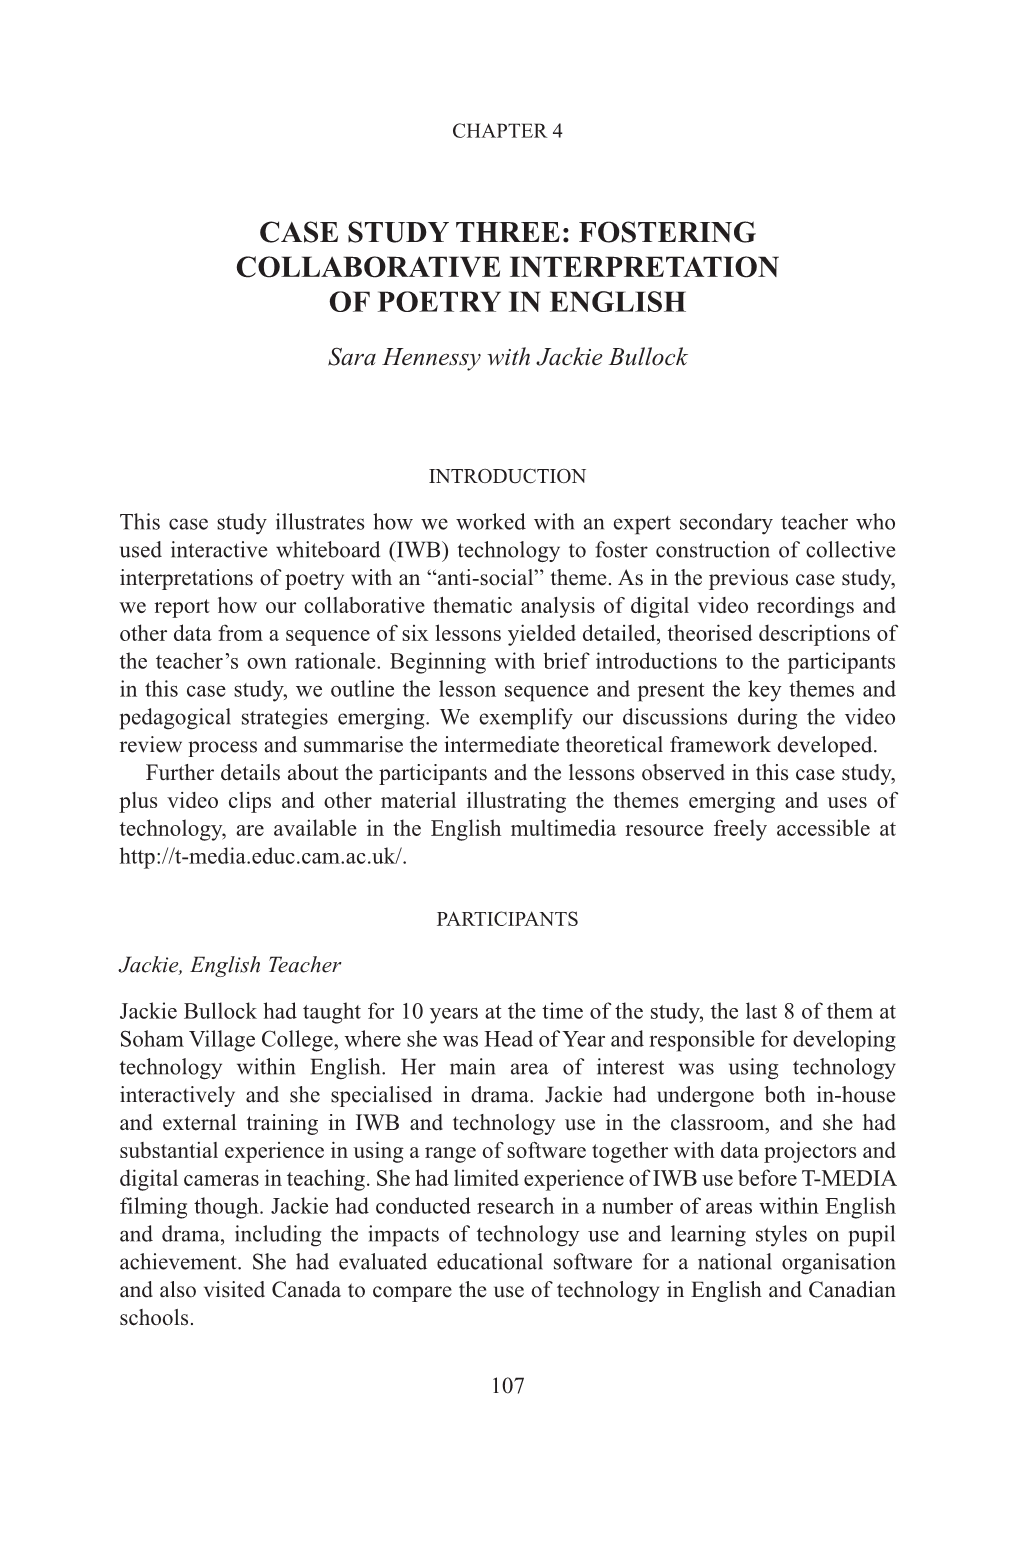 Fostering Collaborative Interpretation of Poetry in English